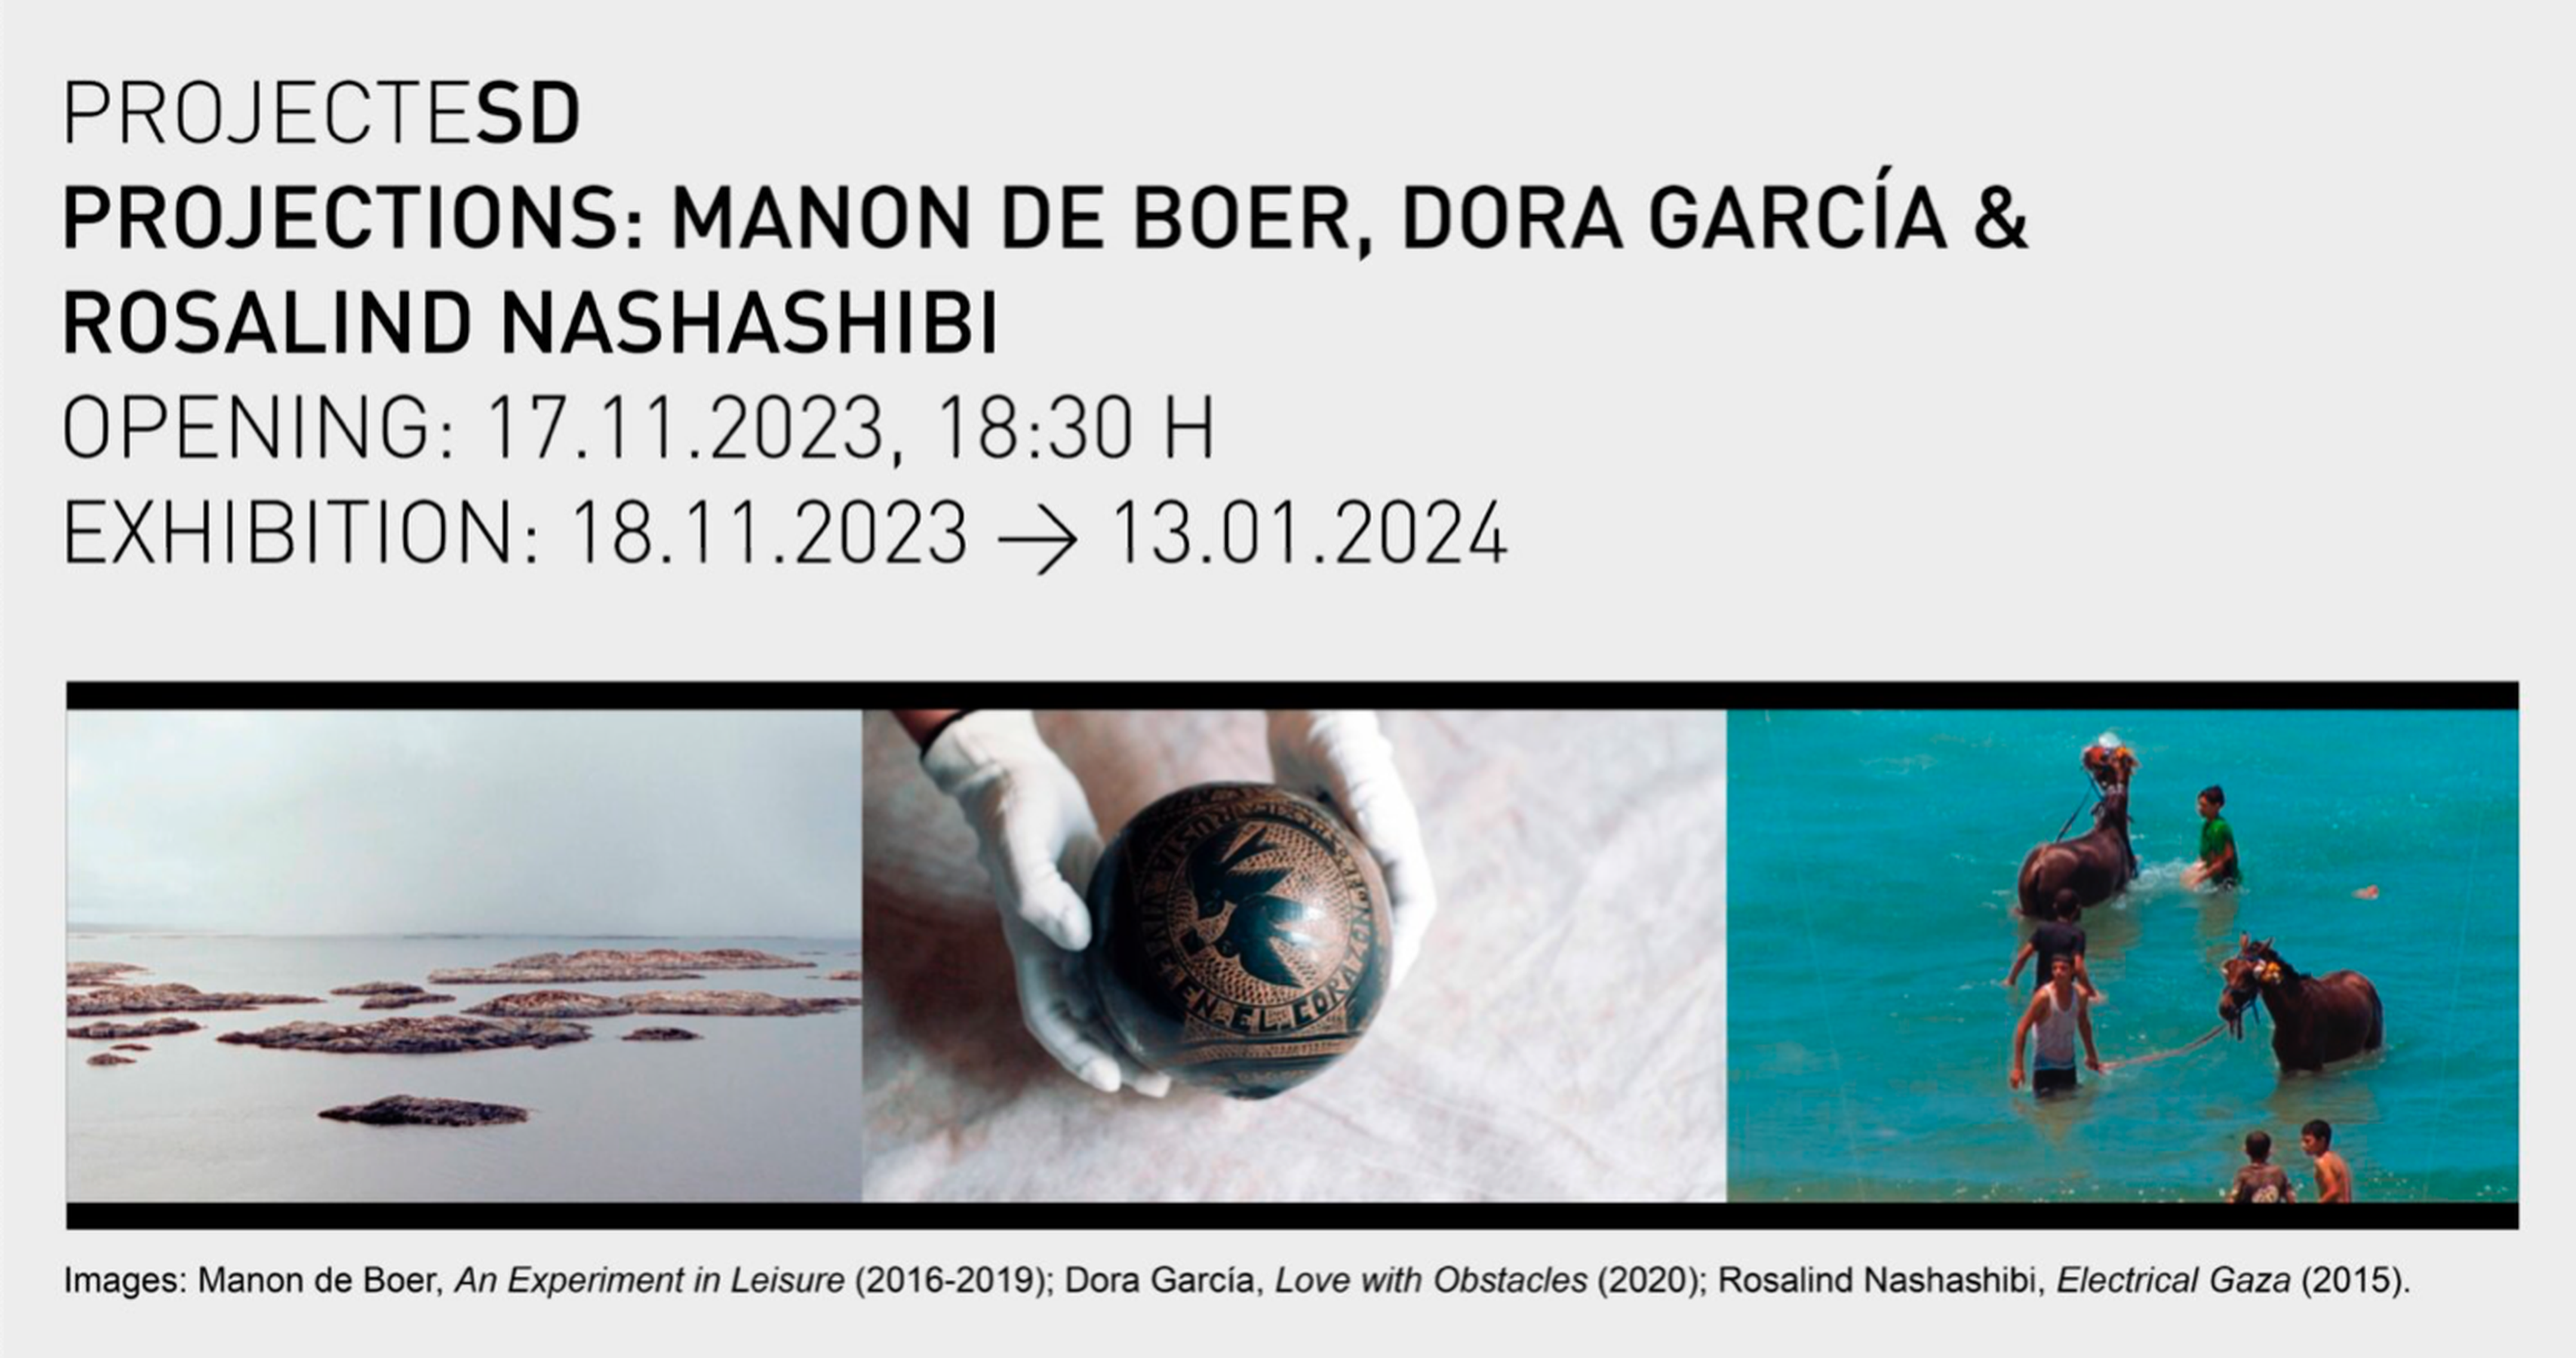 PROJECTIONS: MANON DE BOER, DORA GARCÍA & ROSALIND NASHASHIBI